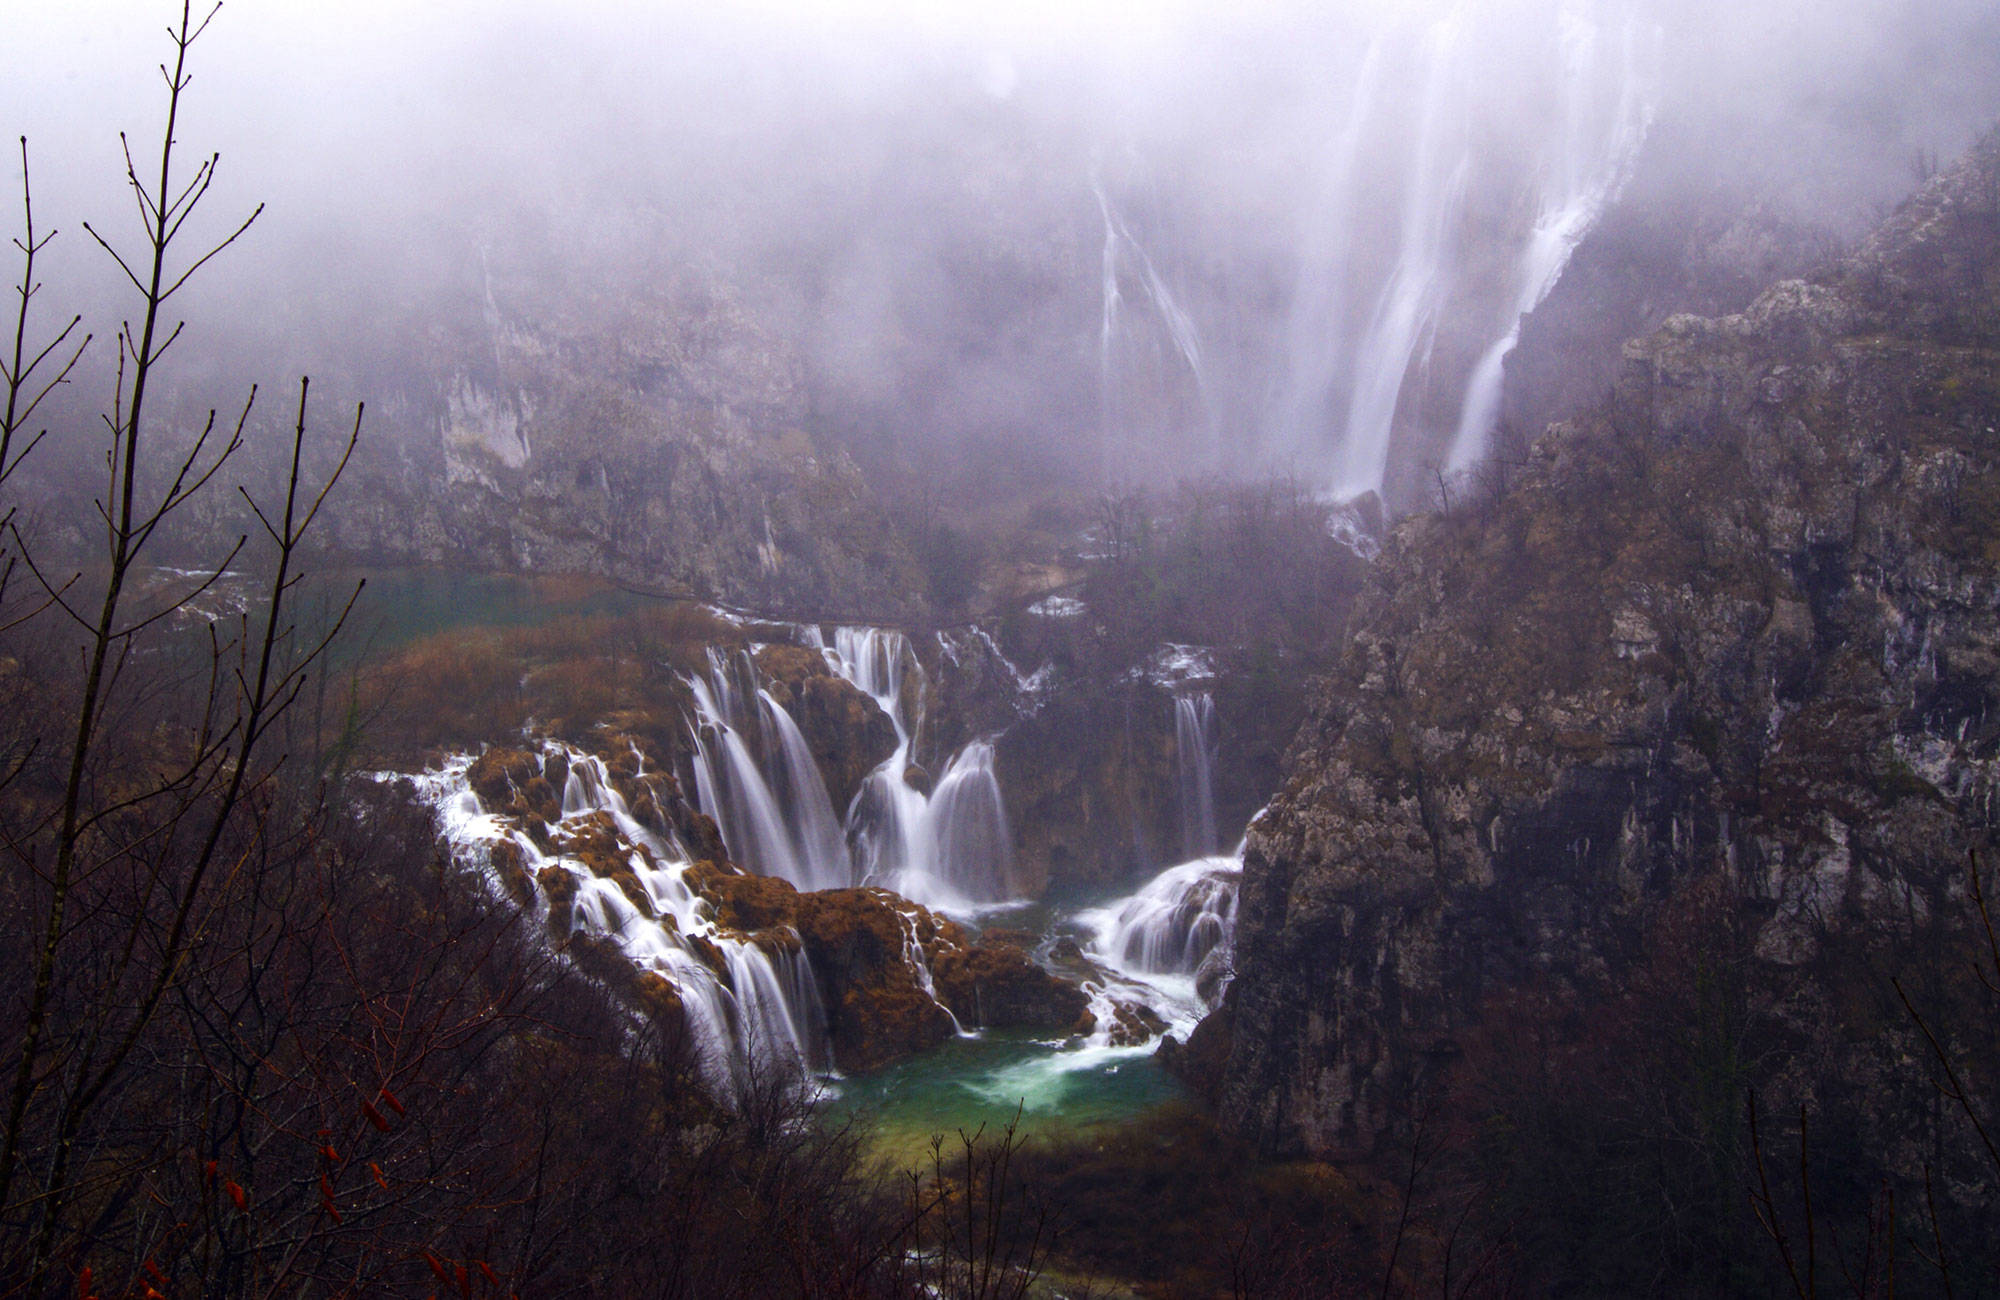 Croatia Plitvice Lakes National Park